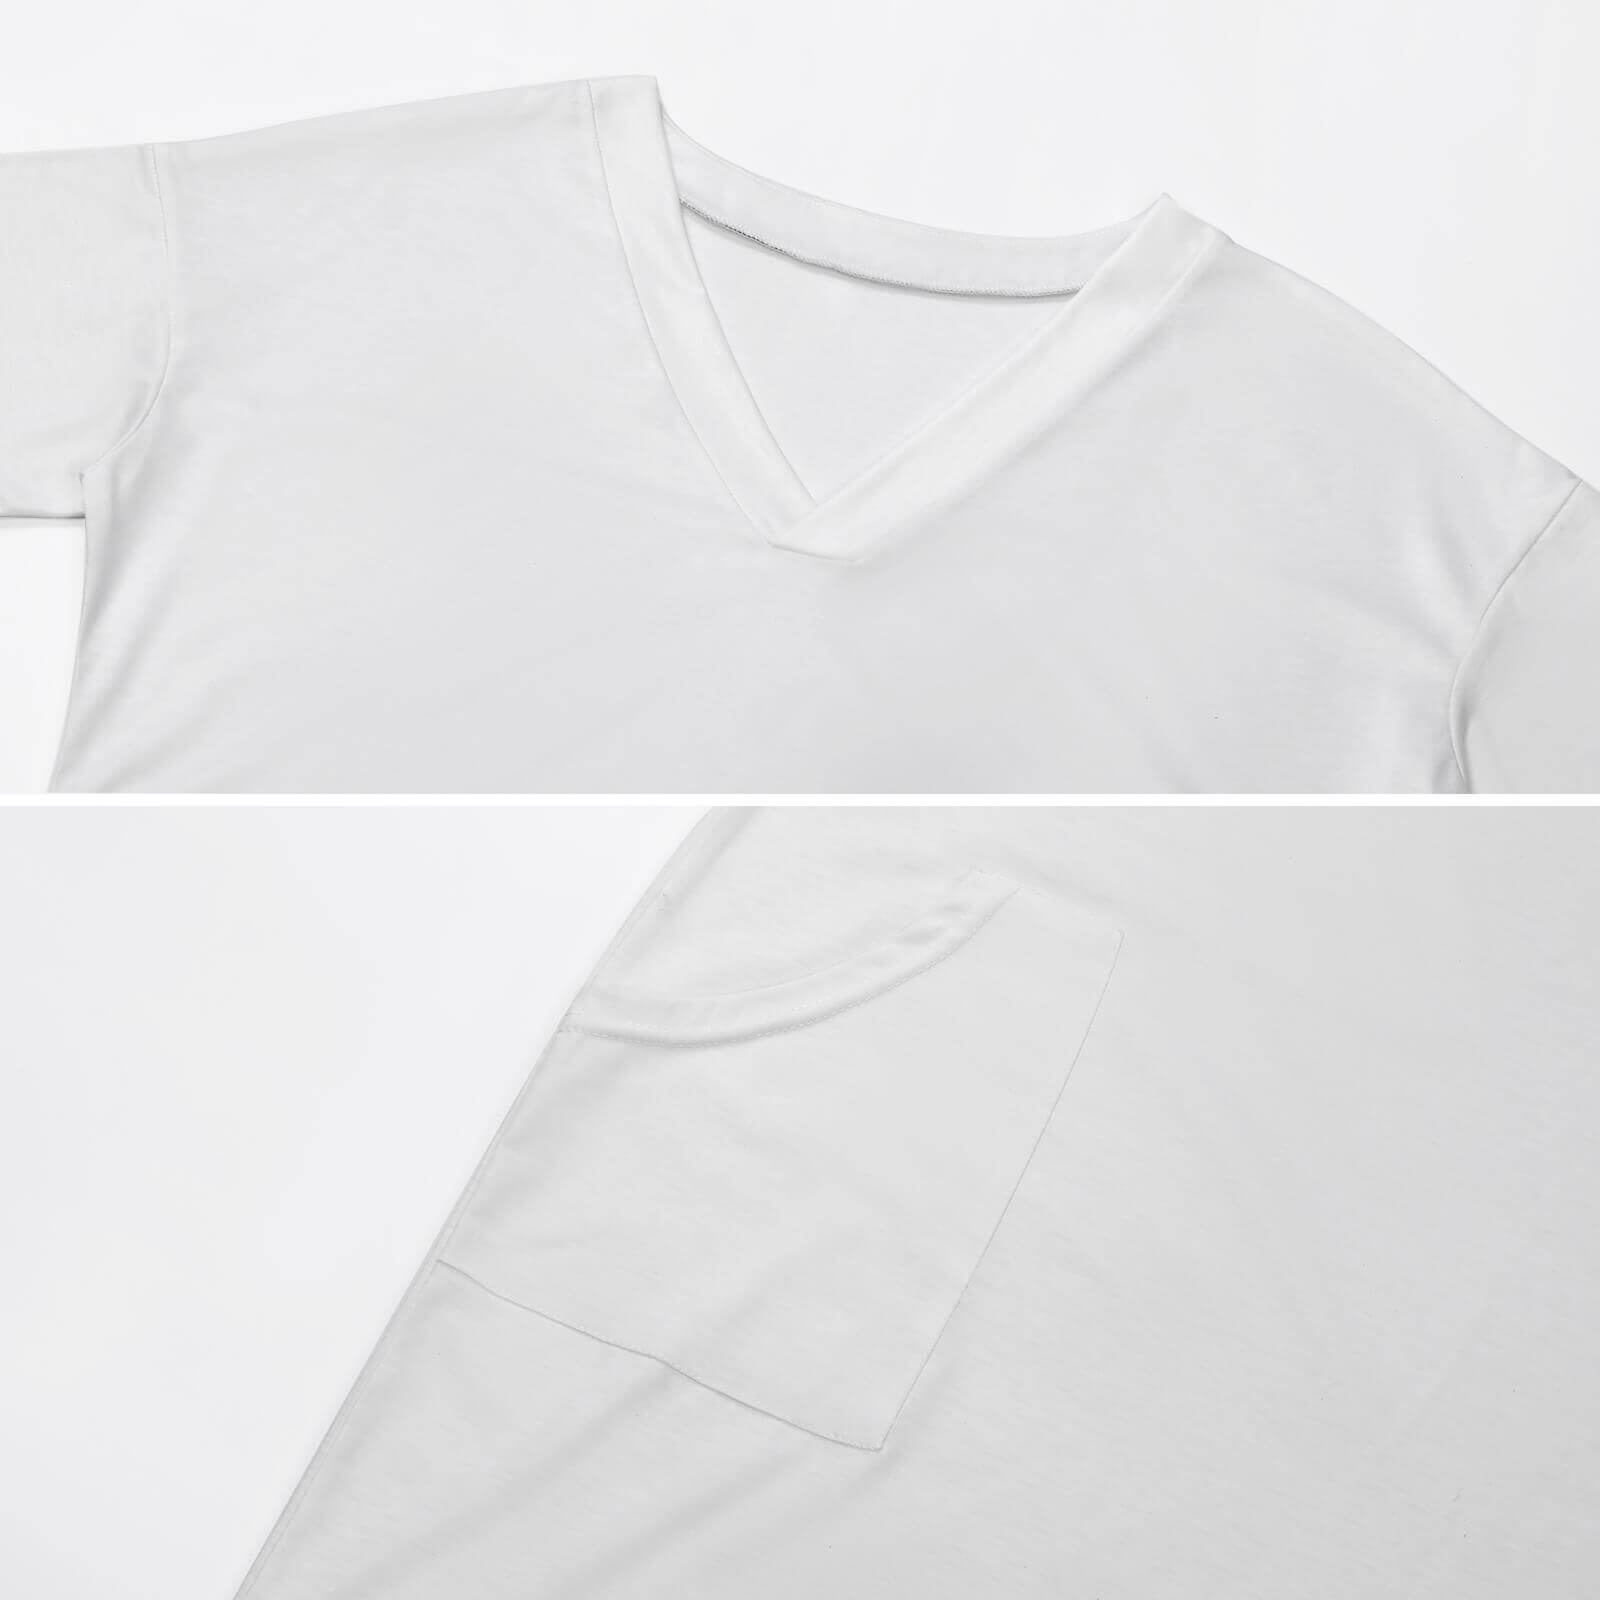 Sigma Beta Xi Loose Fit Tshirt Dress featuring Pockets